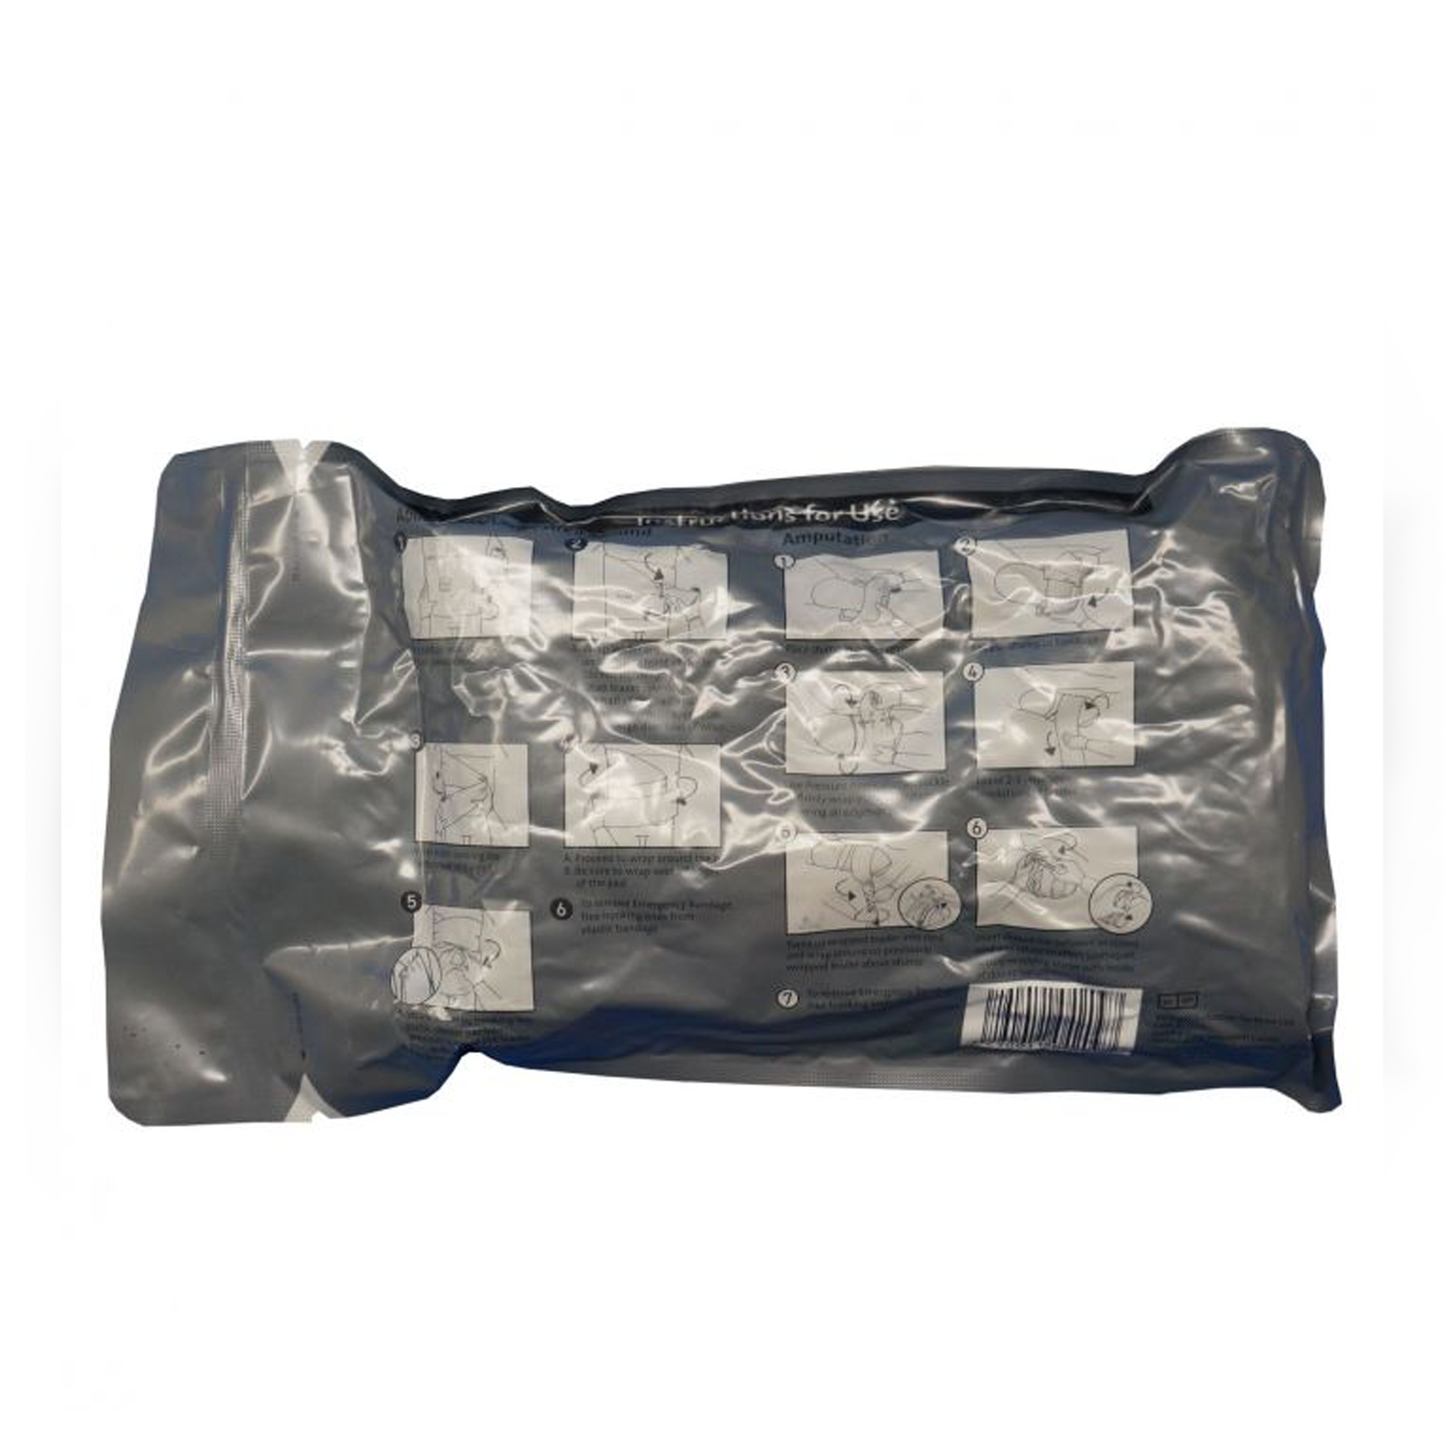 Israeli Bandage - The Emergency Bandage® With Two 6" Wound Pads & Pressure Bar